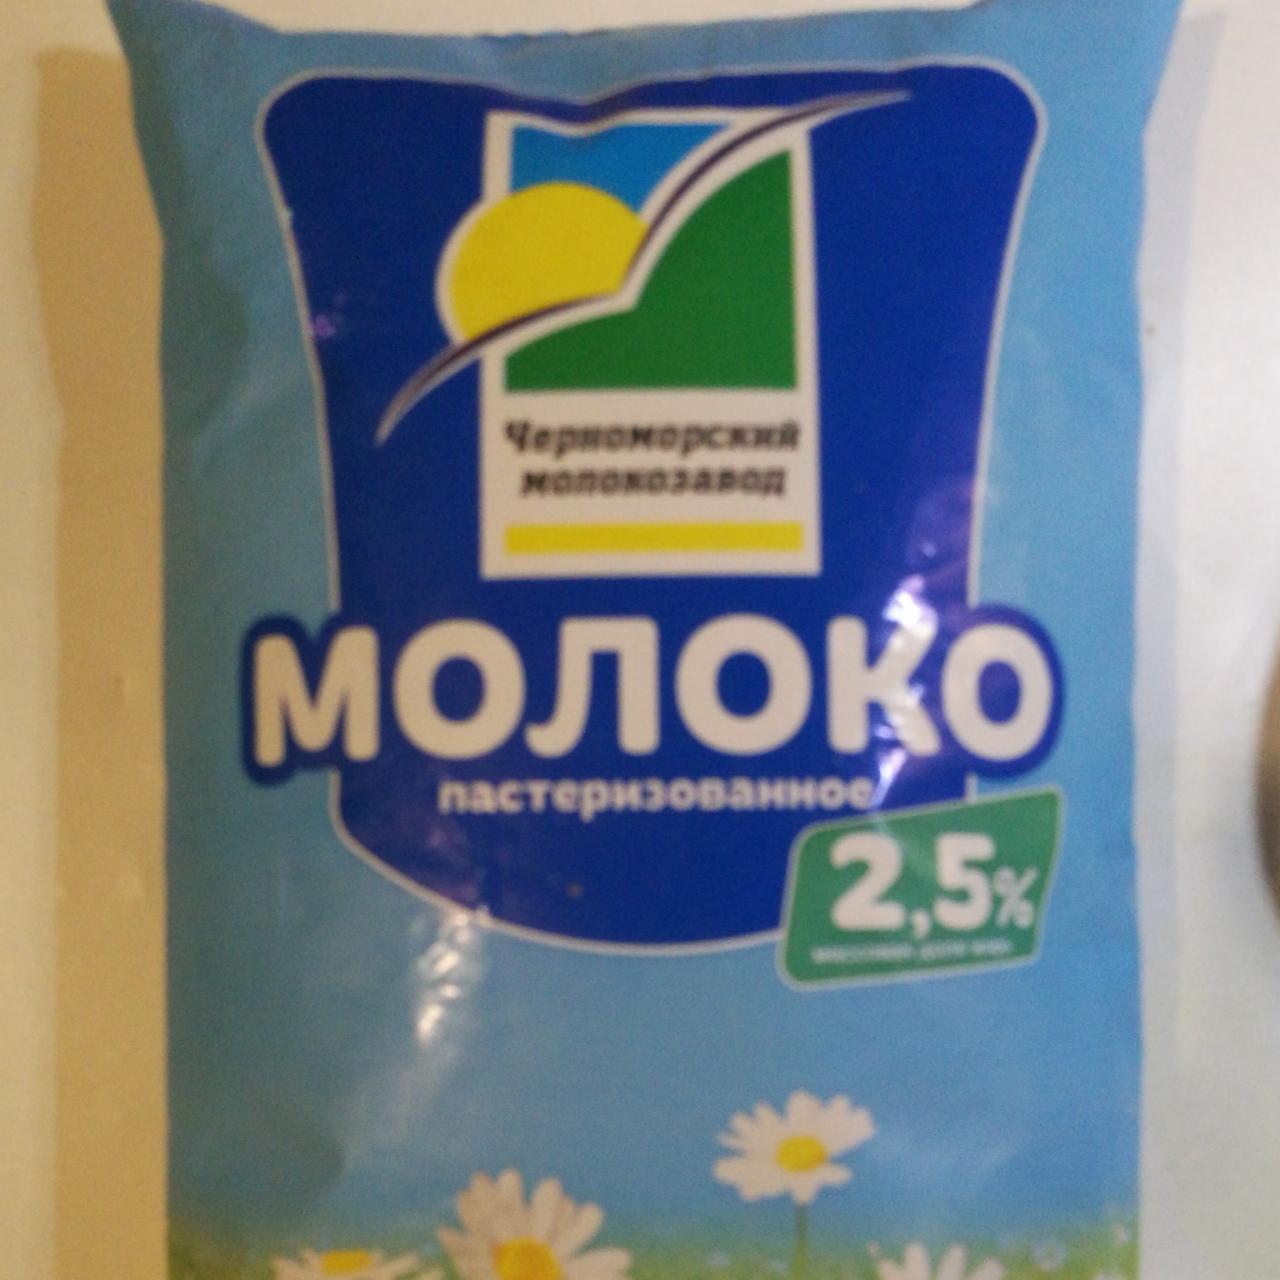 Фото - Молоко 2.5% Черноморский молокозавод